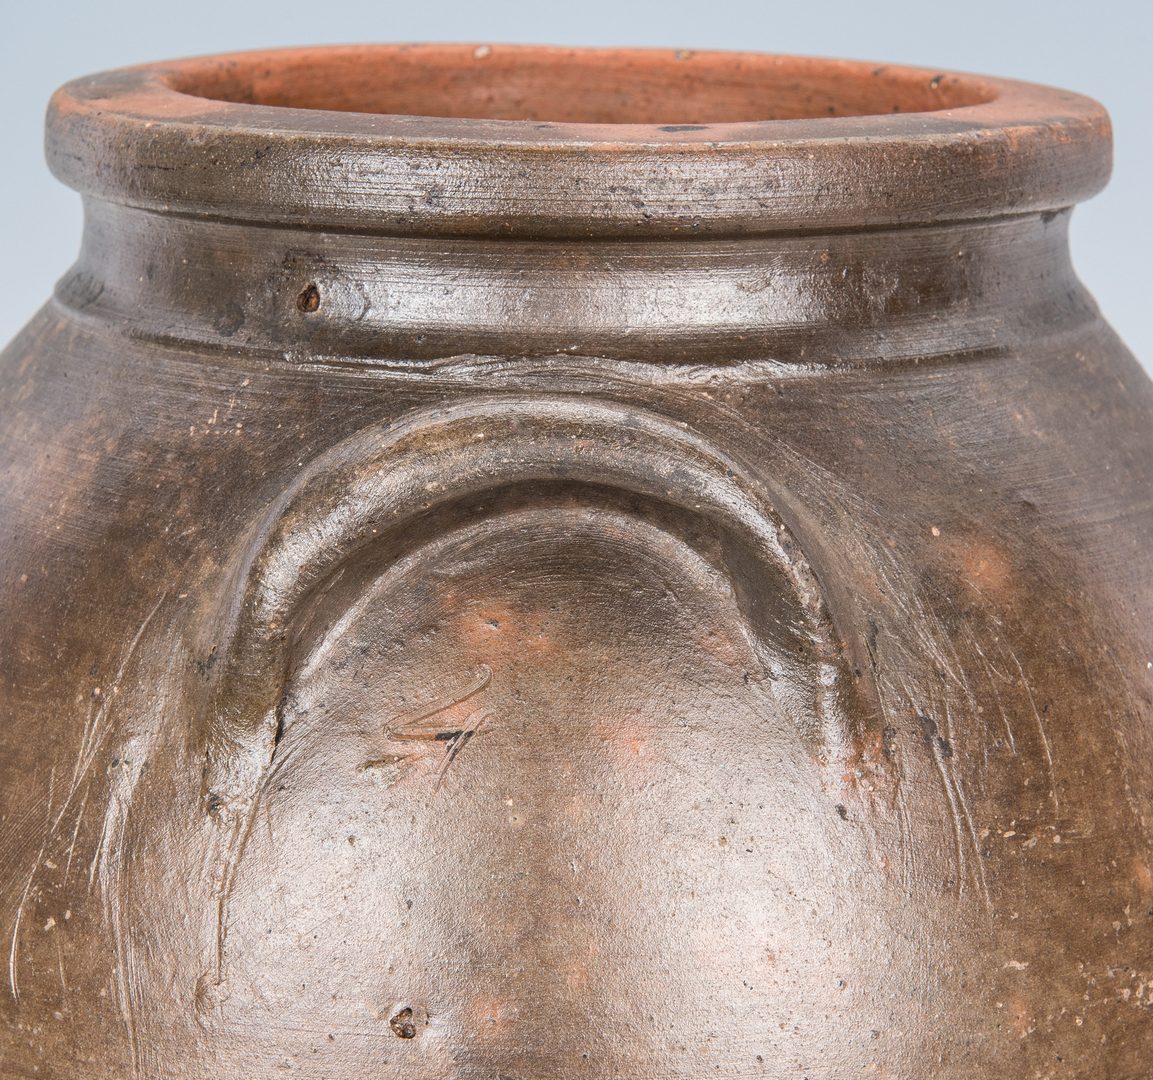 Lot 143: 2 East TN Stoneware Pottery Jars, 1 exhibited